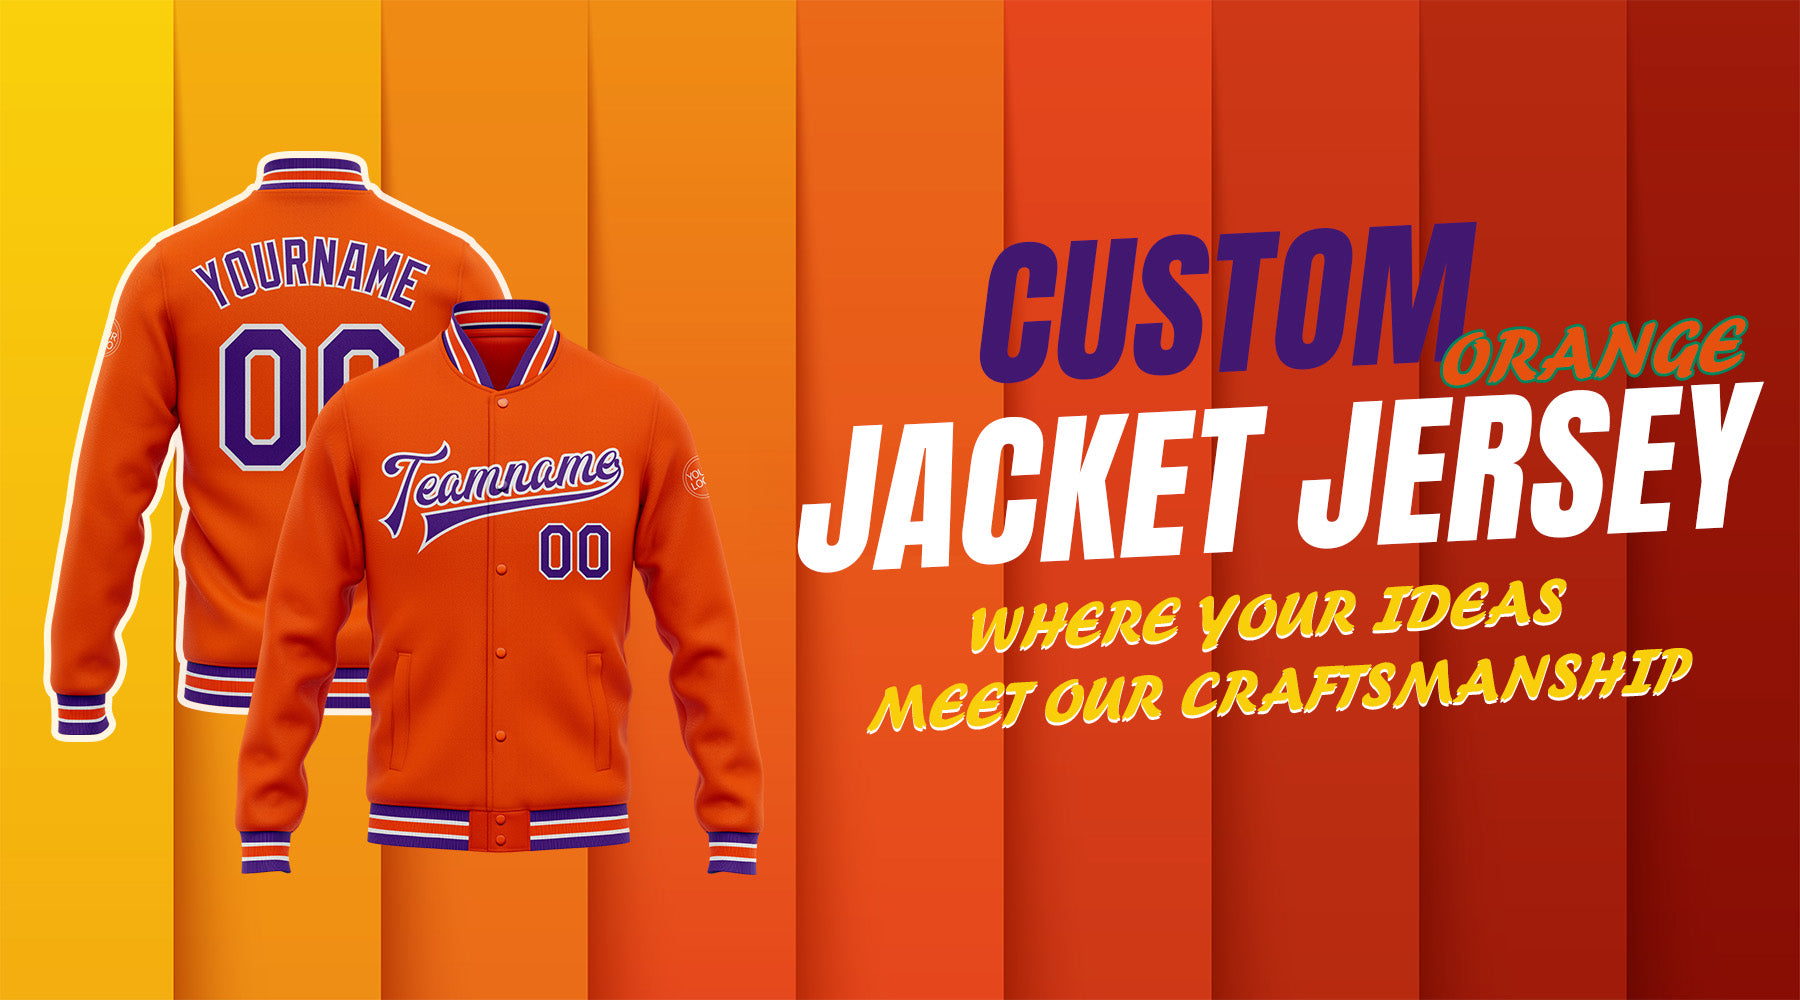 custom jacket orange jersey